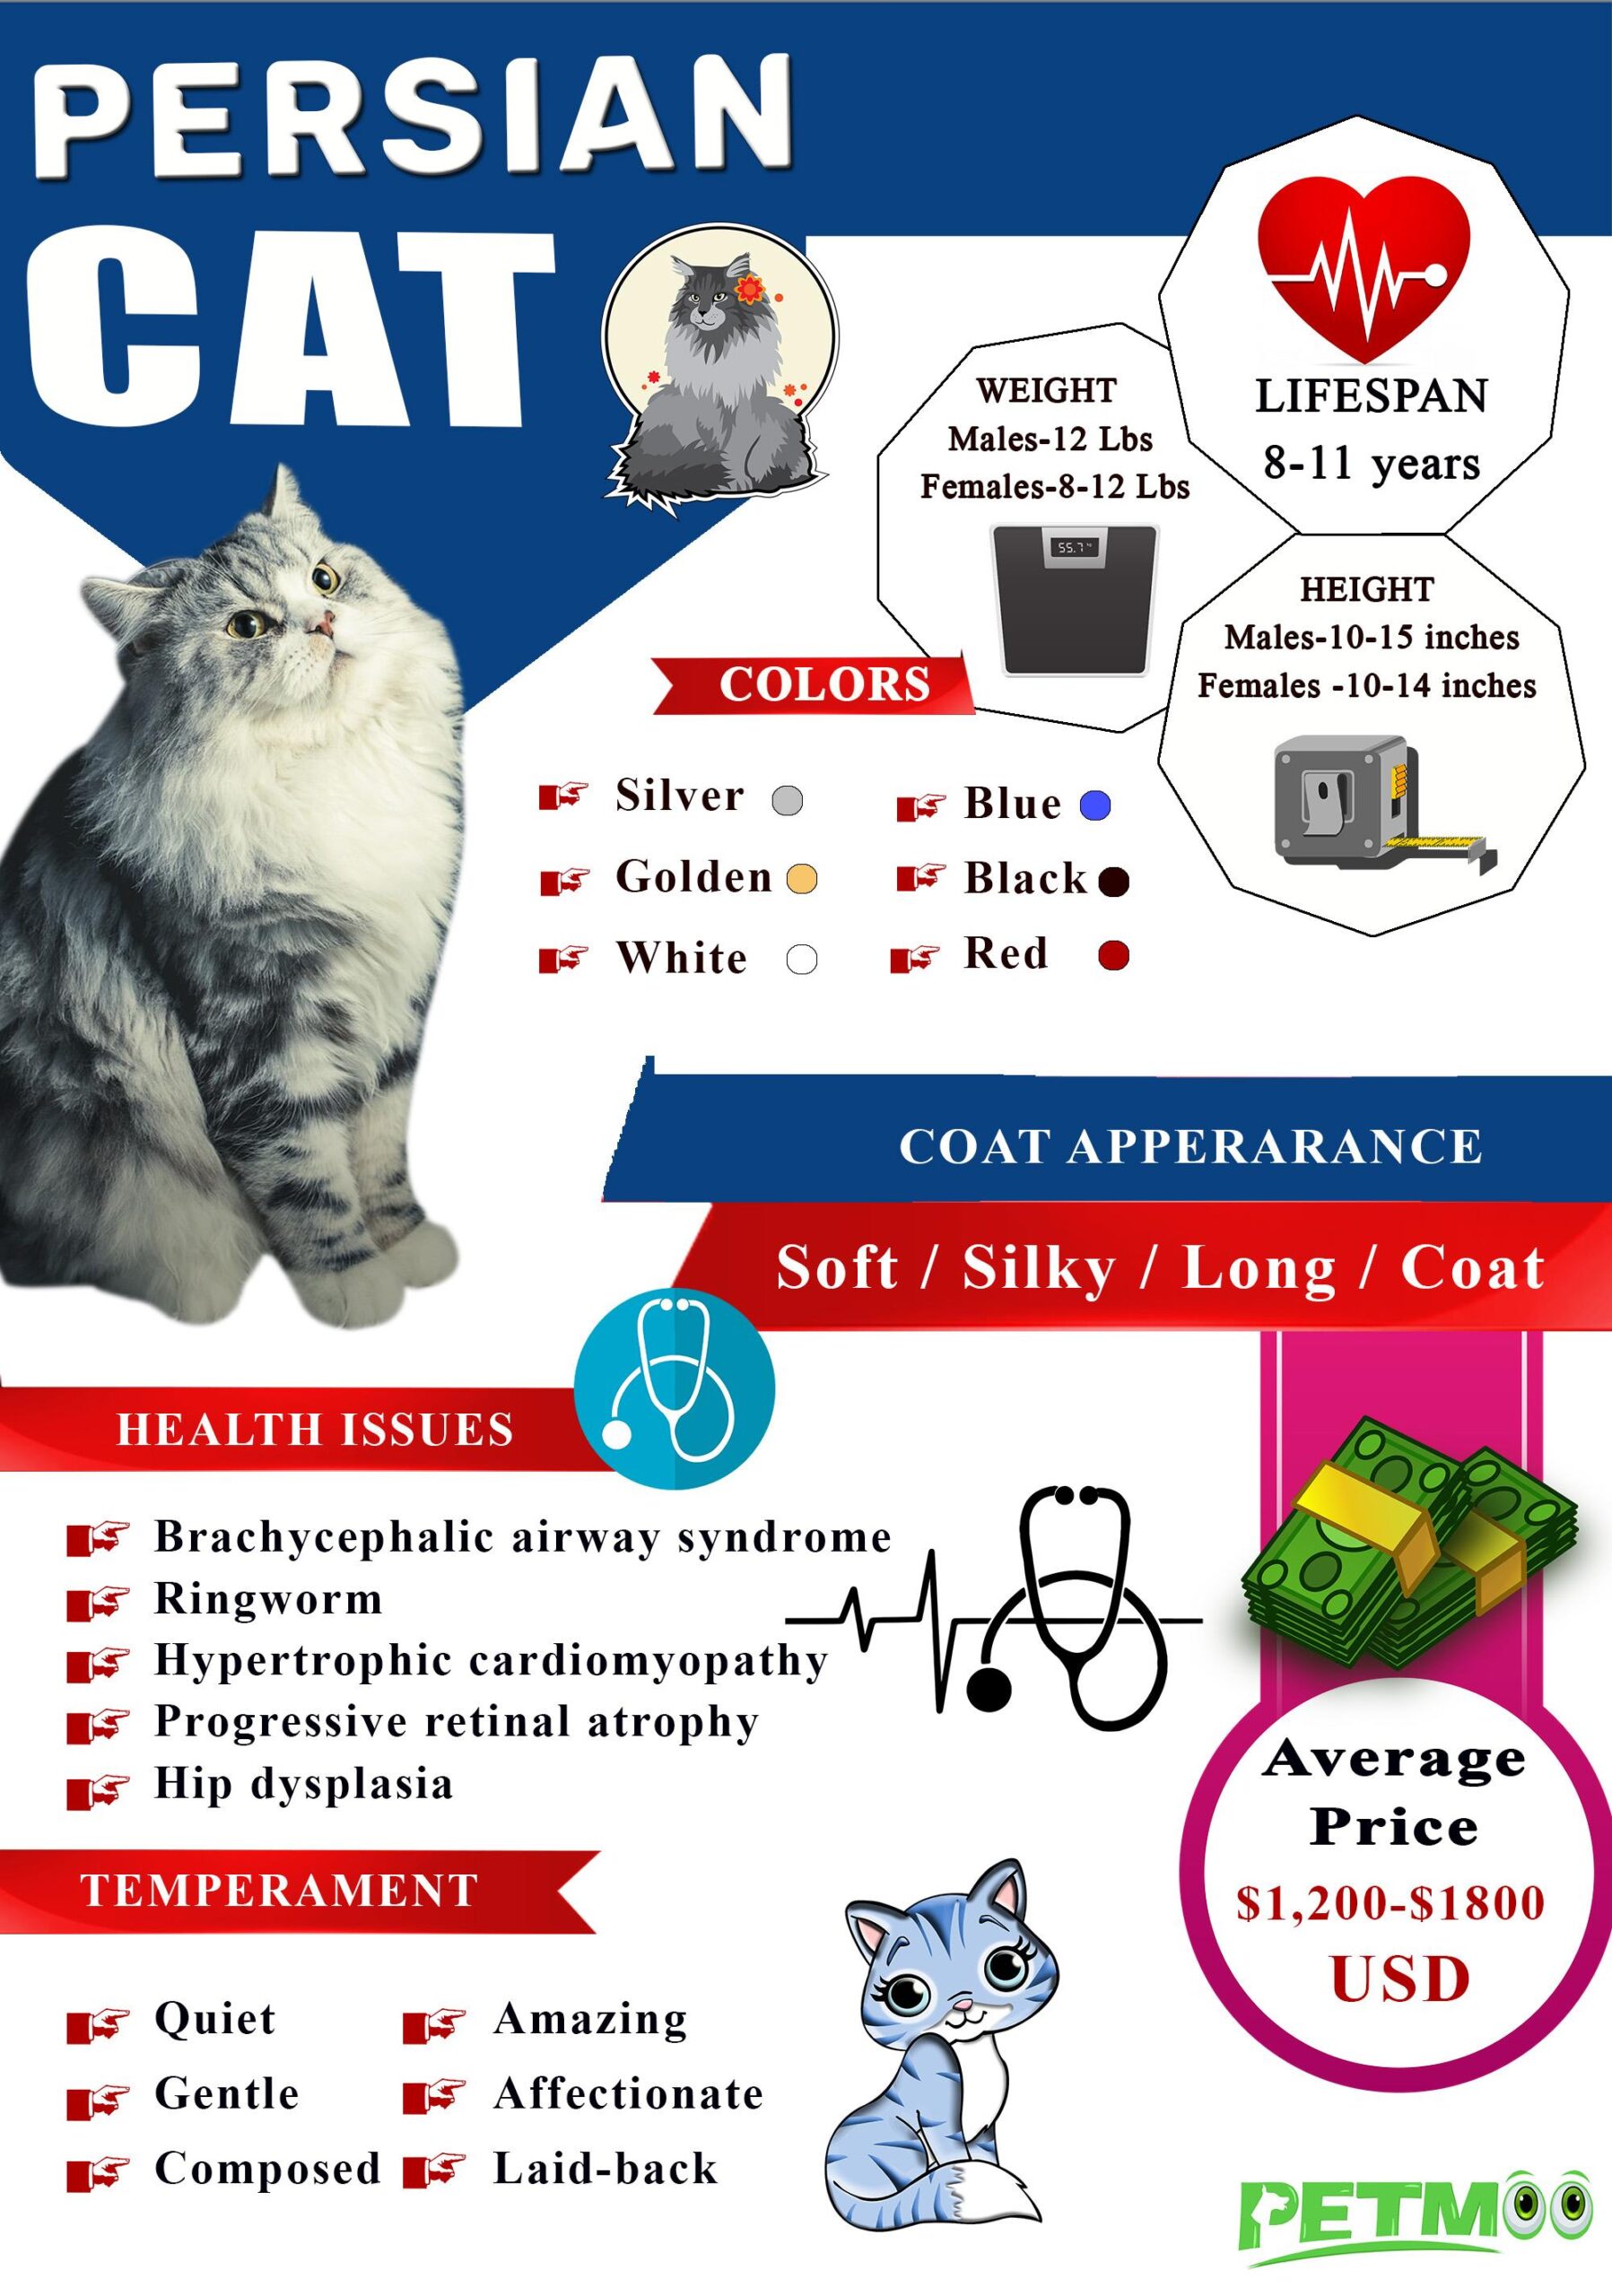 Persian Cat Infographic